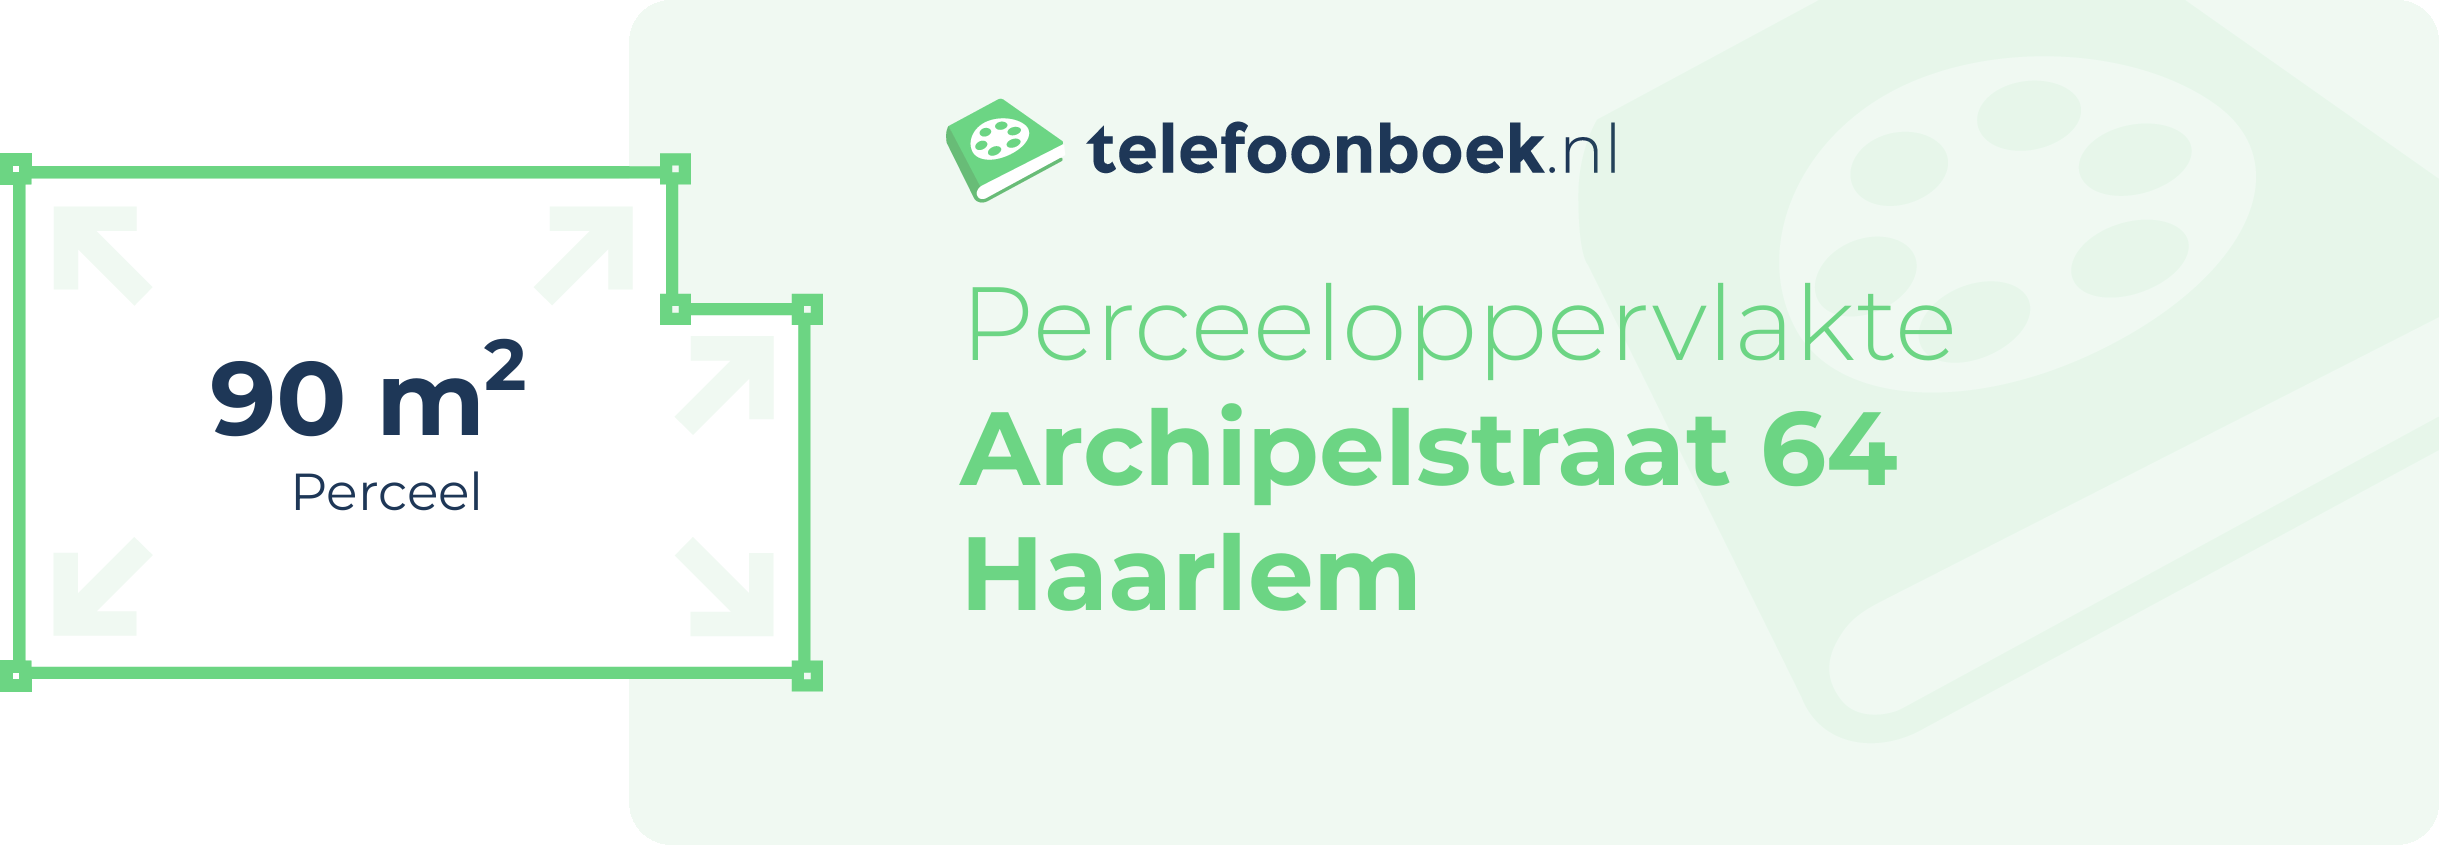 Perceeloppervlakte Archipelstraat 64 Haarlem